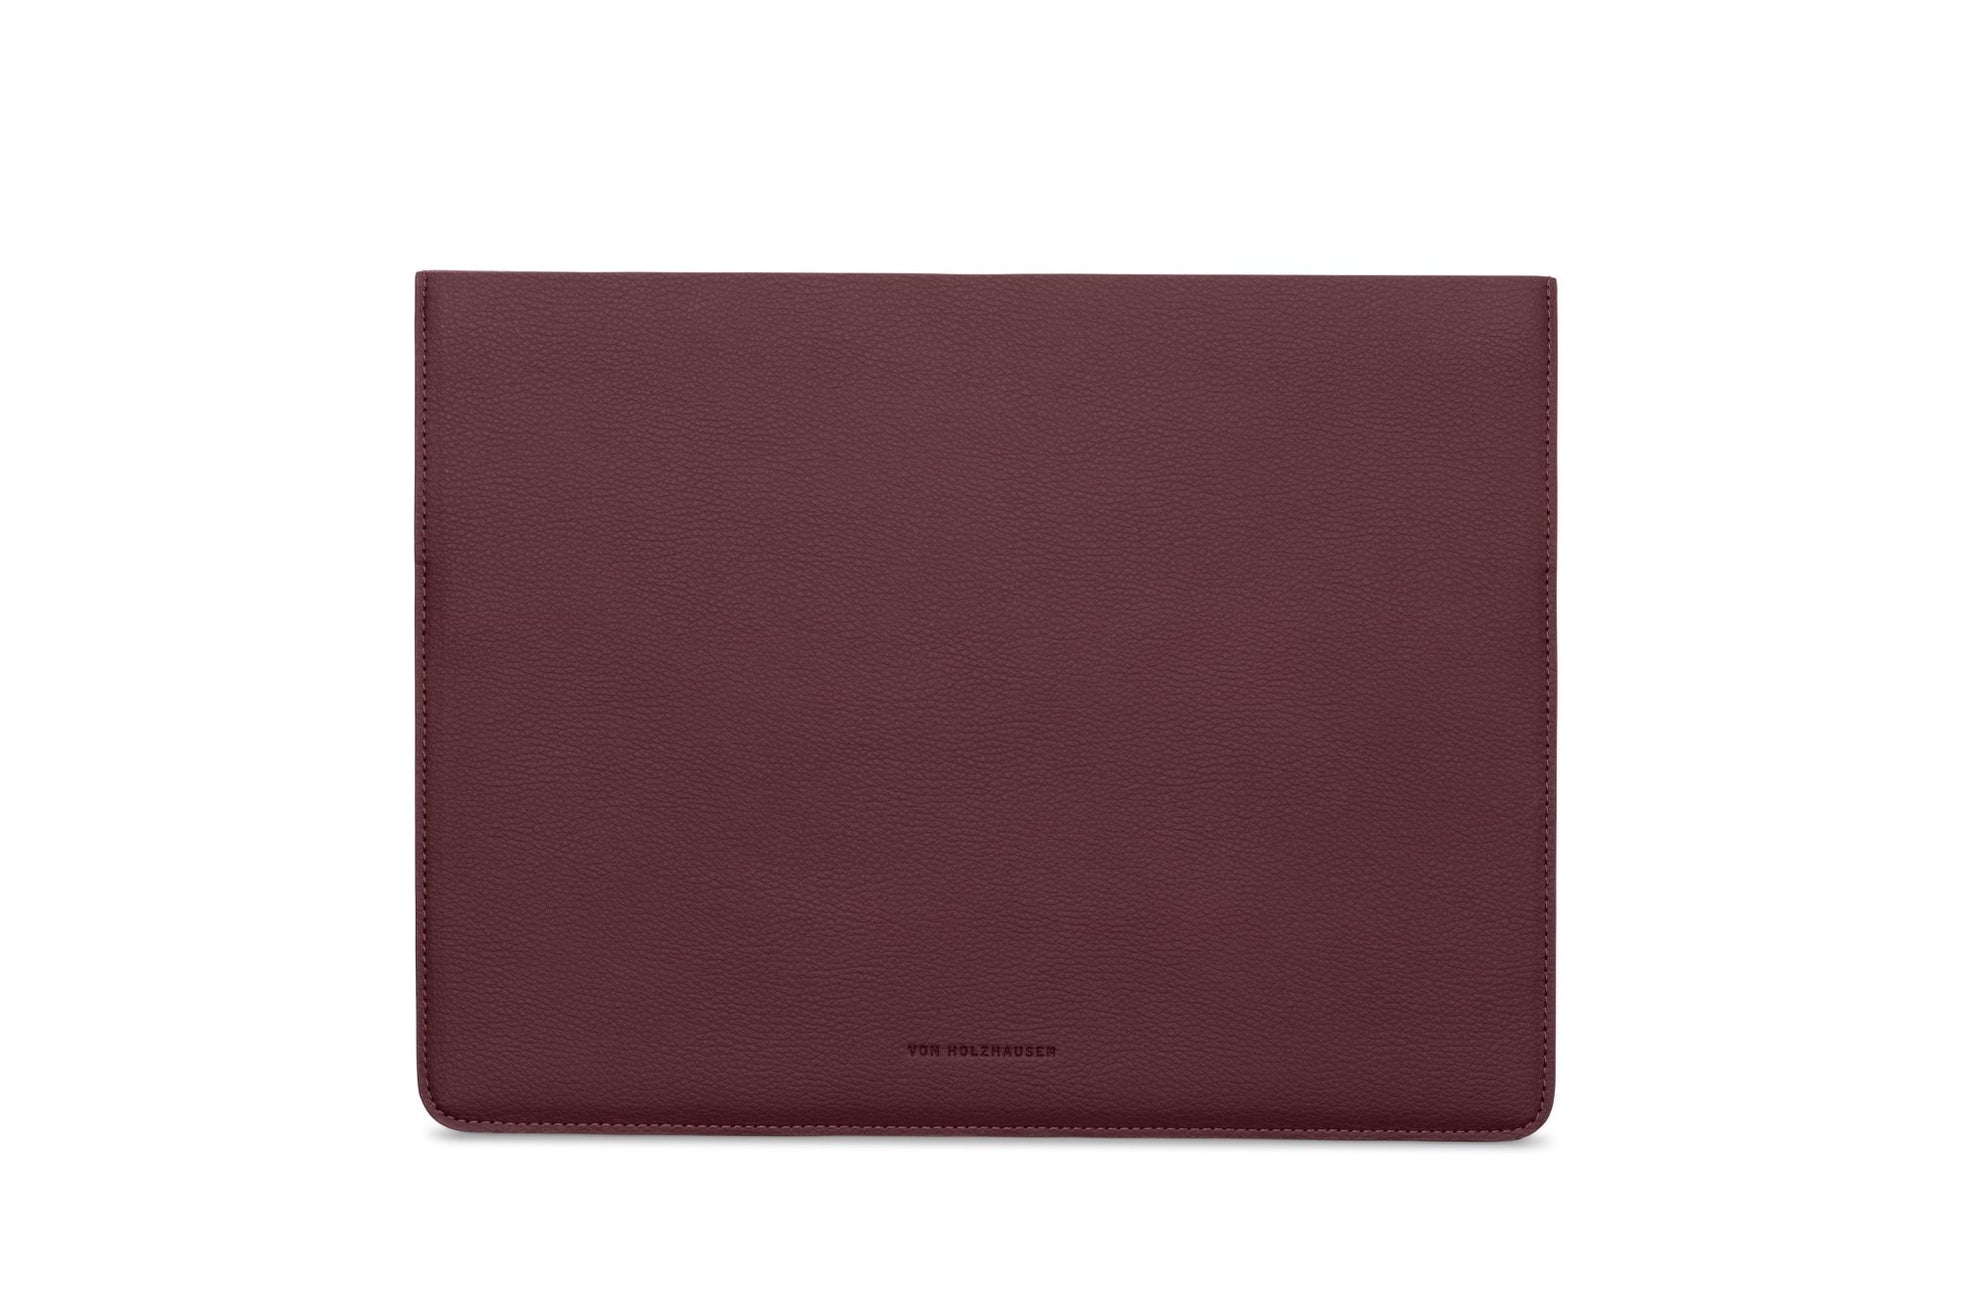 The MacBook Sleeve 13-inch - Sample Sale in Technik in Burgundy image 3